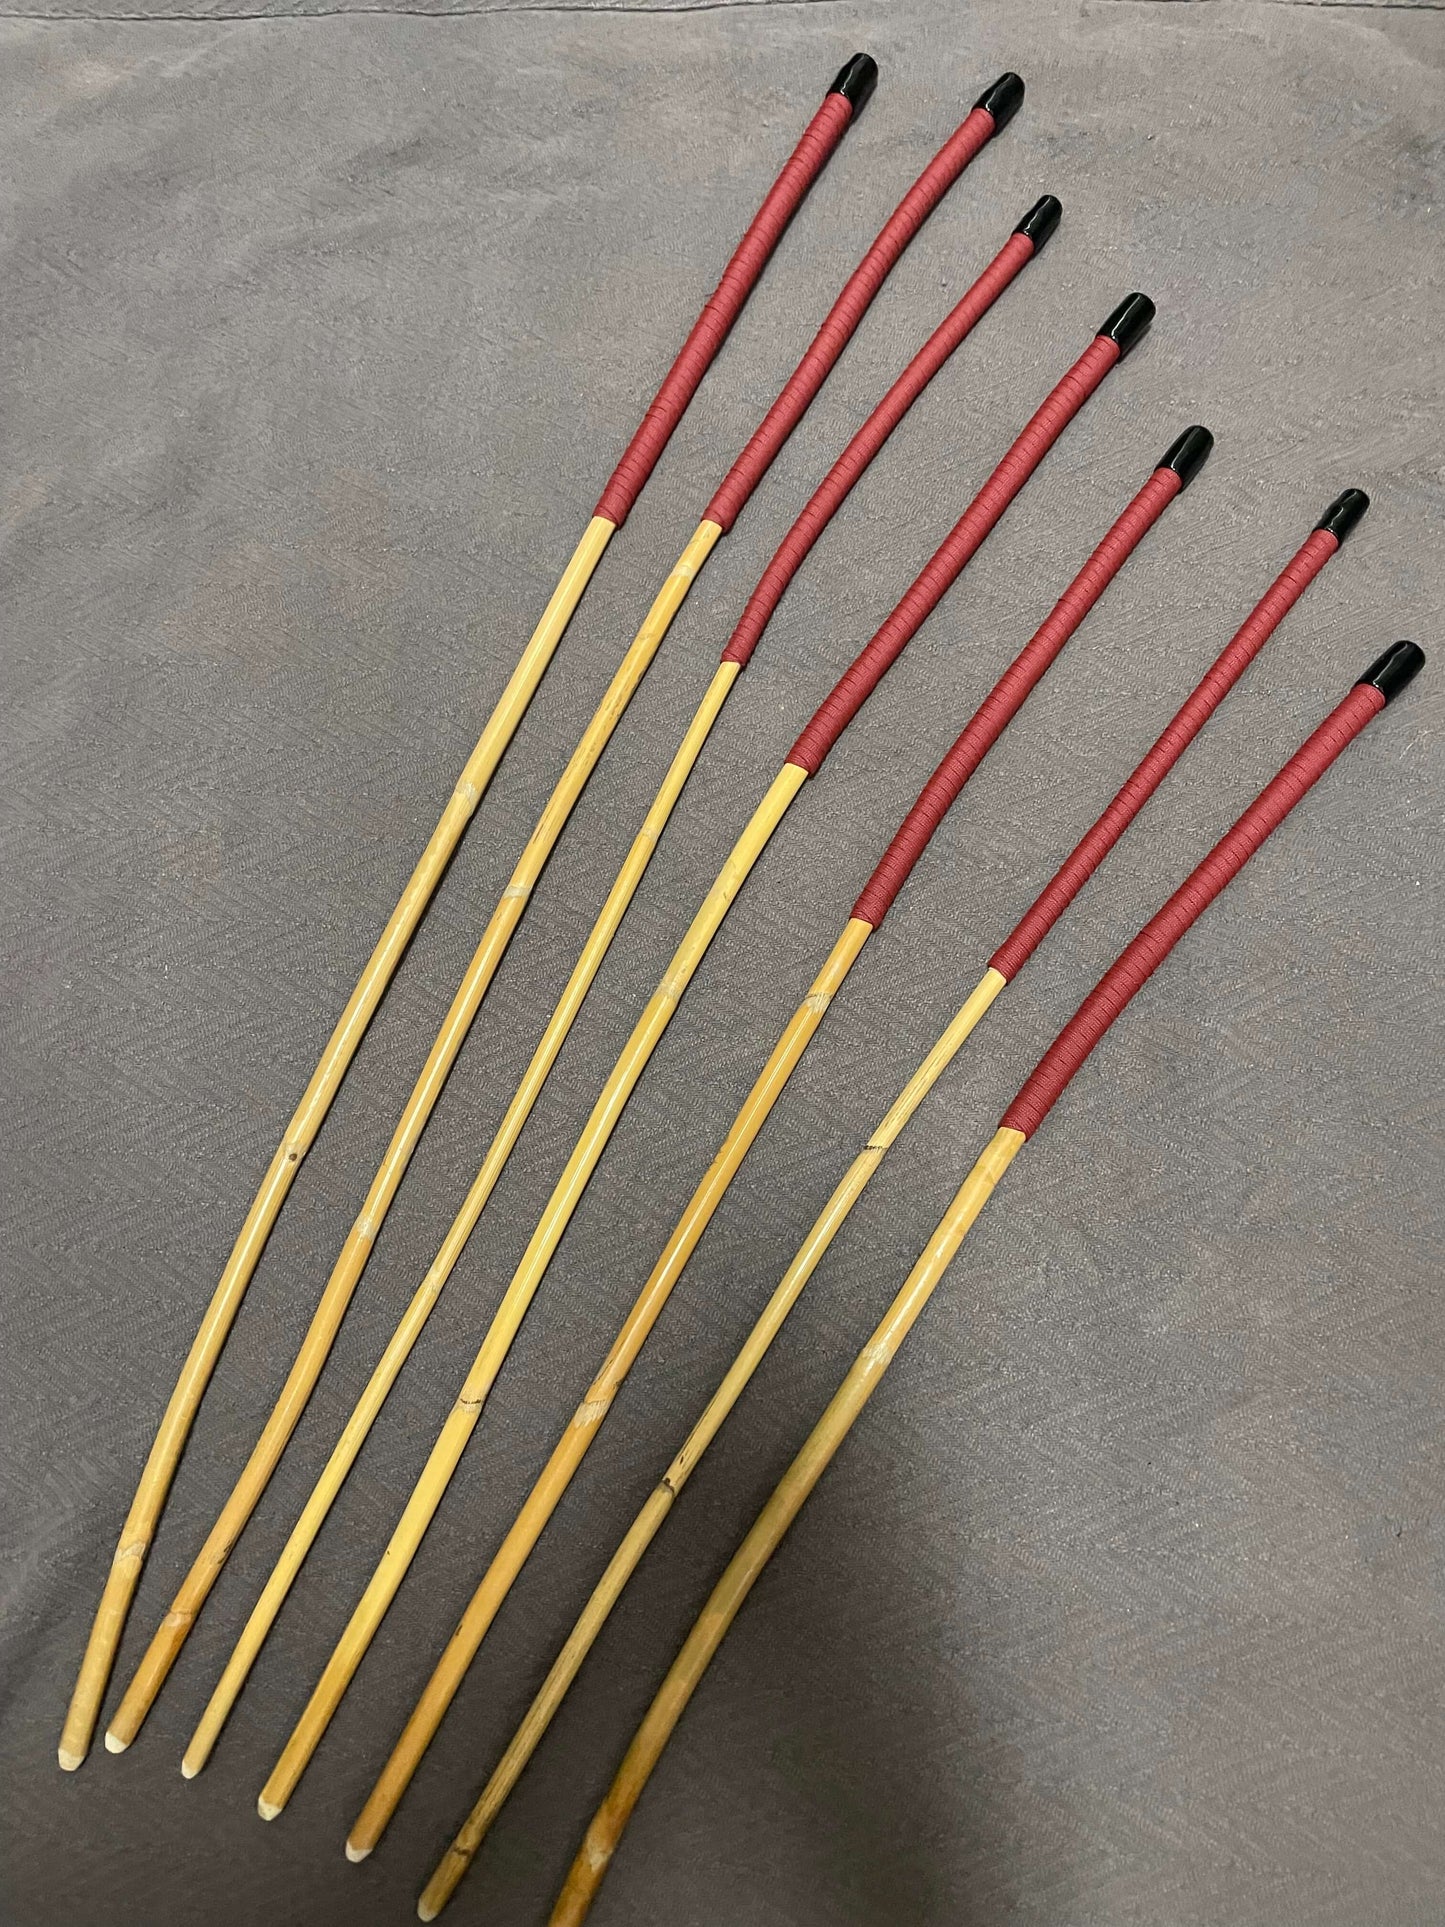 Beginners Kooboo Cane Set of 7 Classic Kooboo Rattan Punishment canes / School Canes / BDSM Canes - BRICK RED  Handles